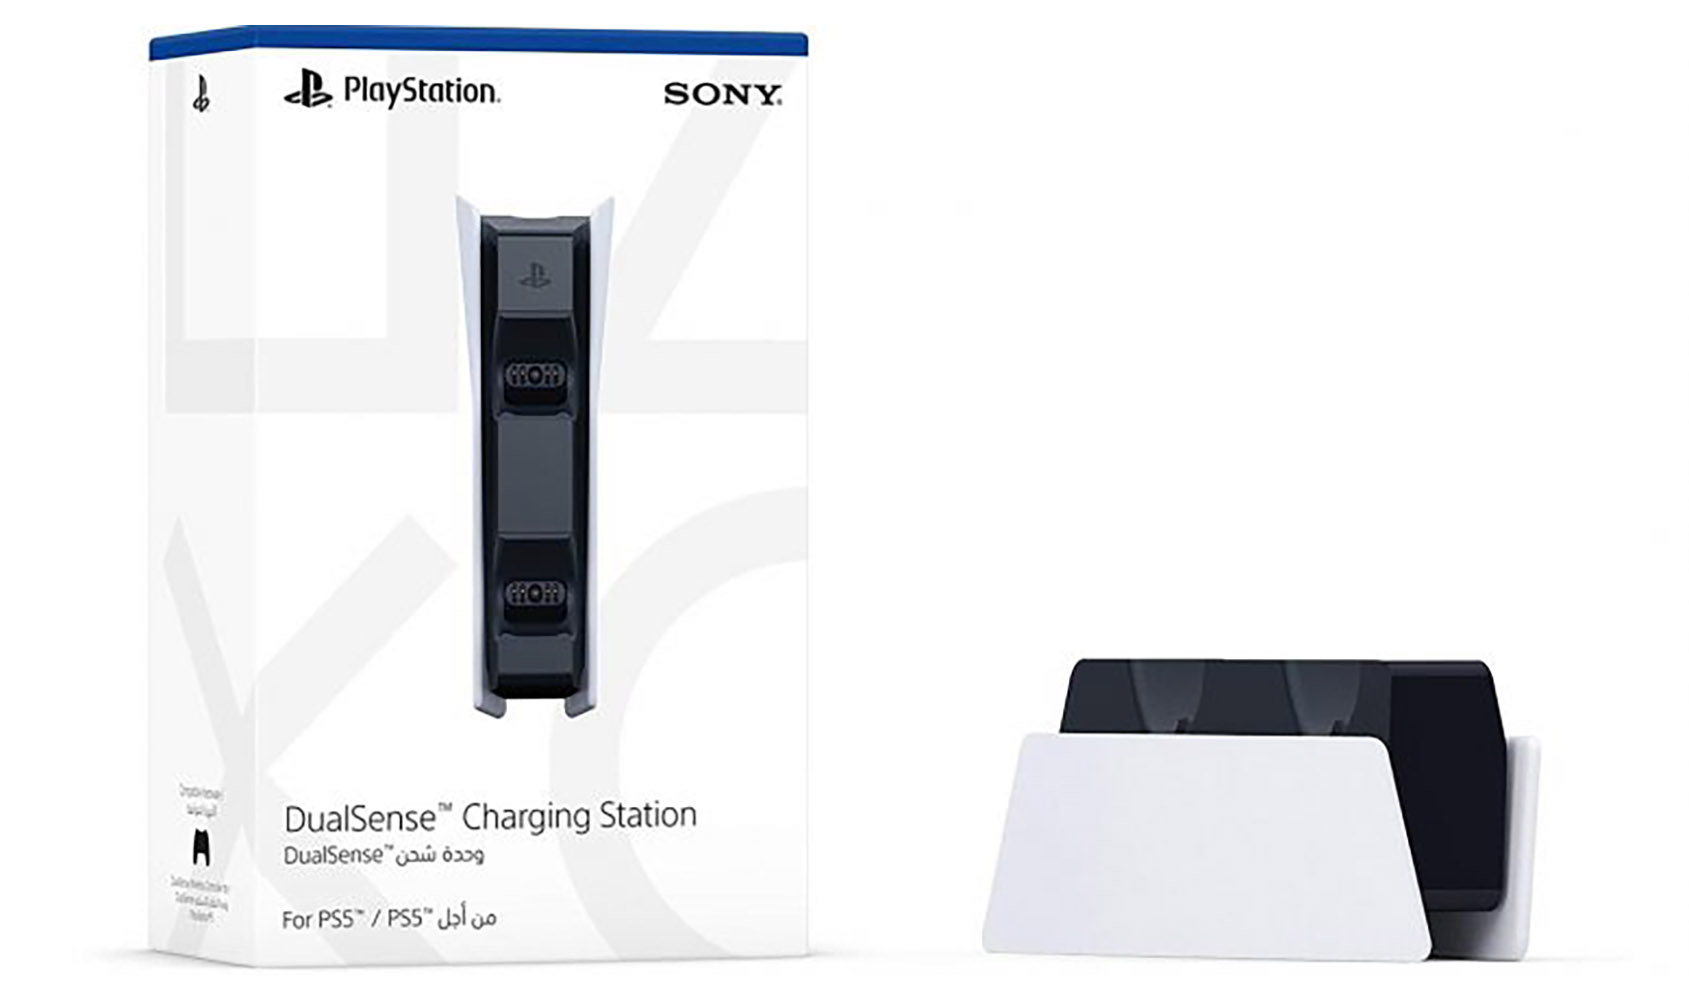   DualSense charging station  PlayStation 5